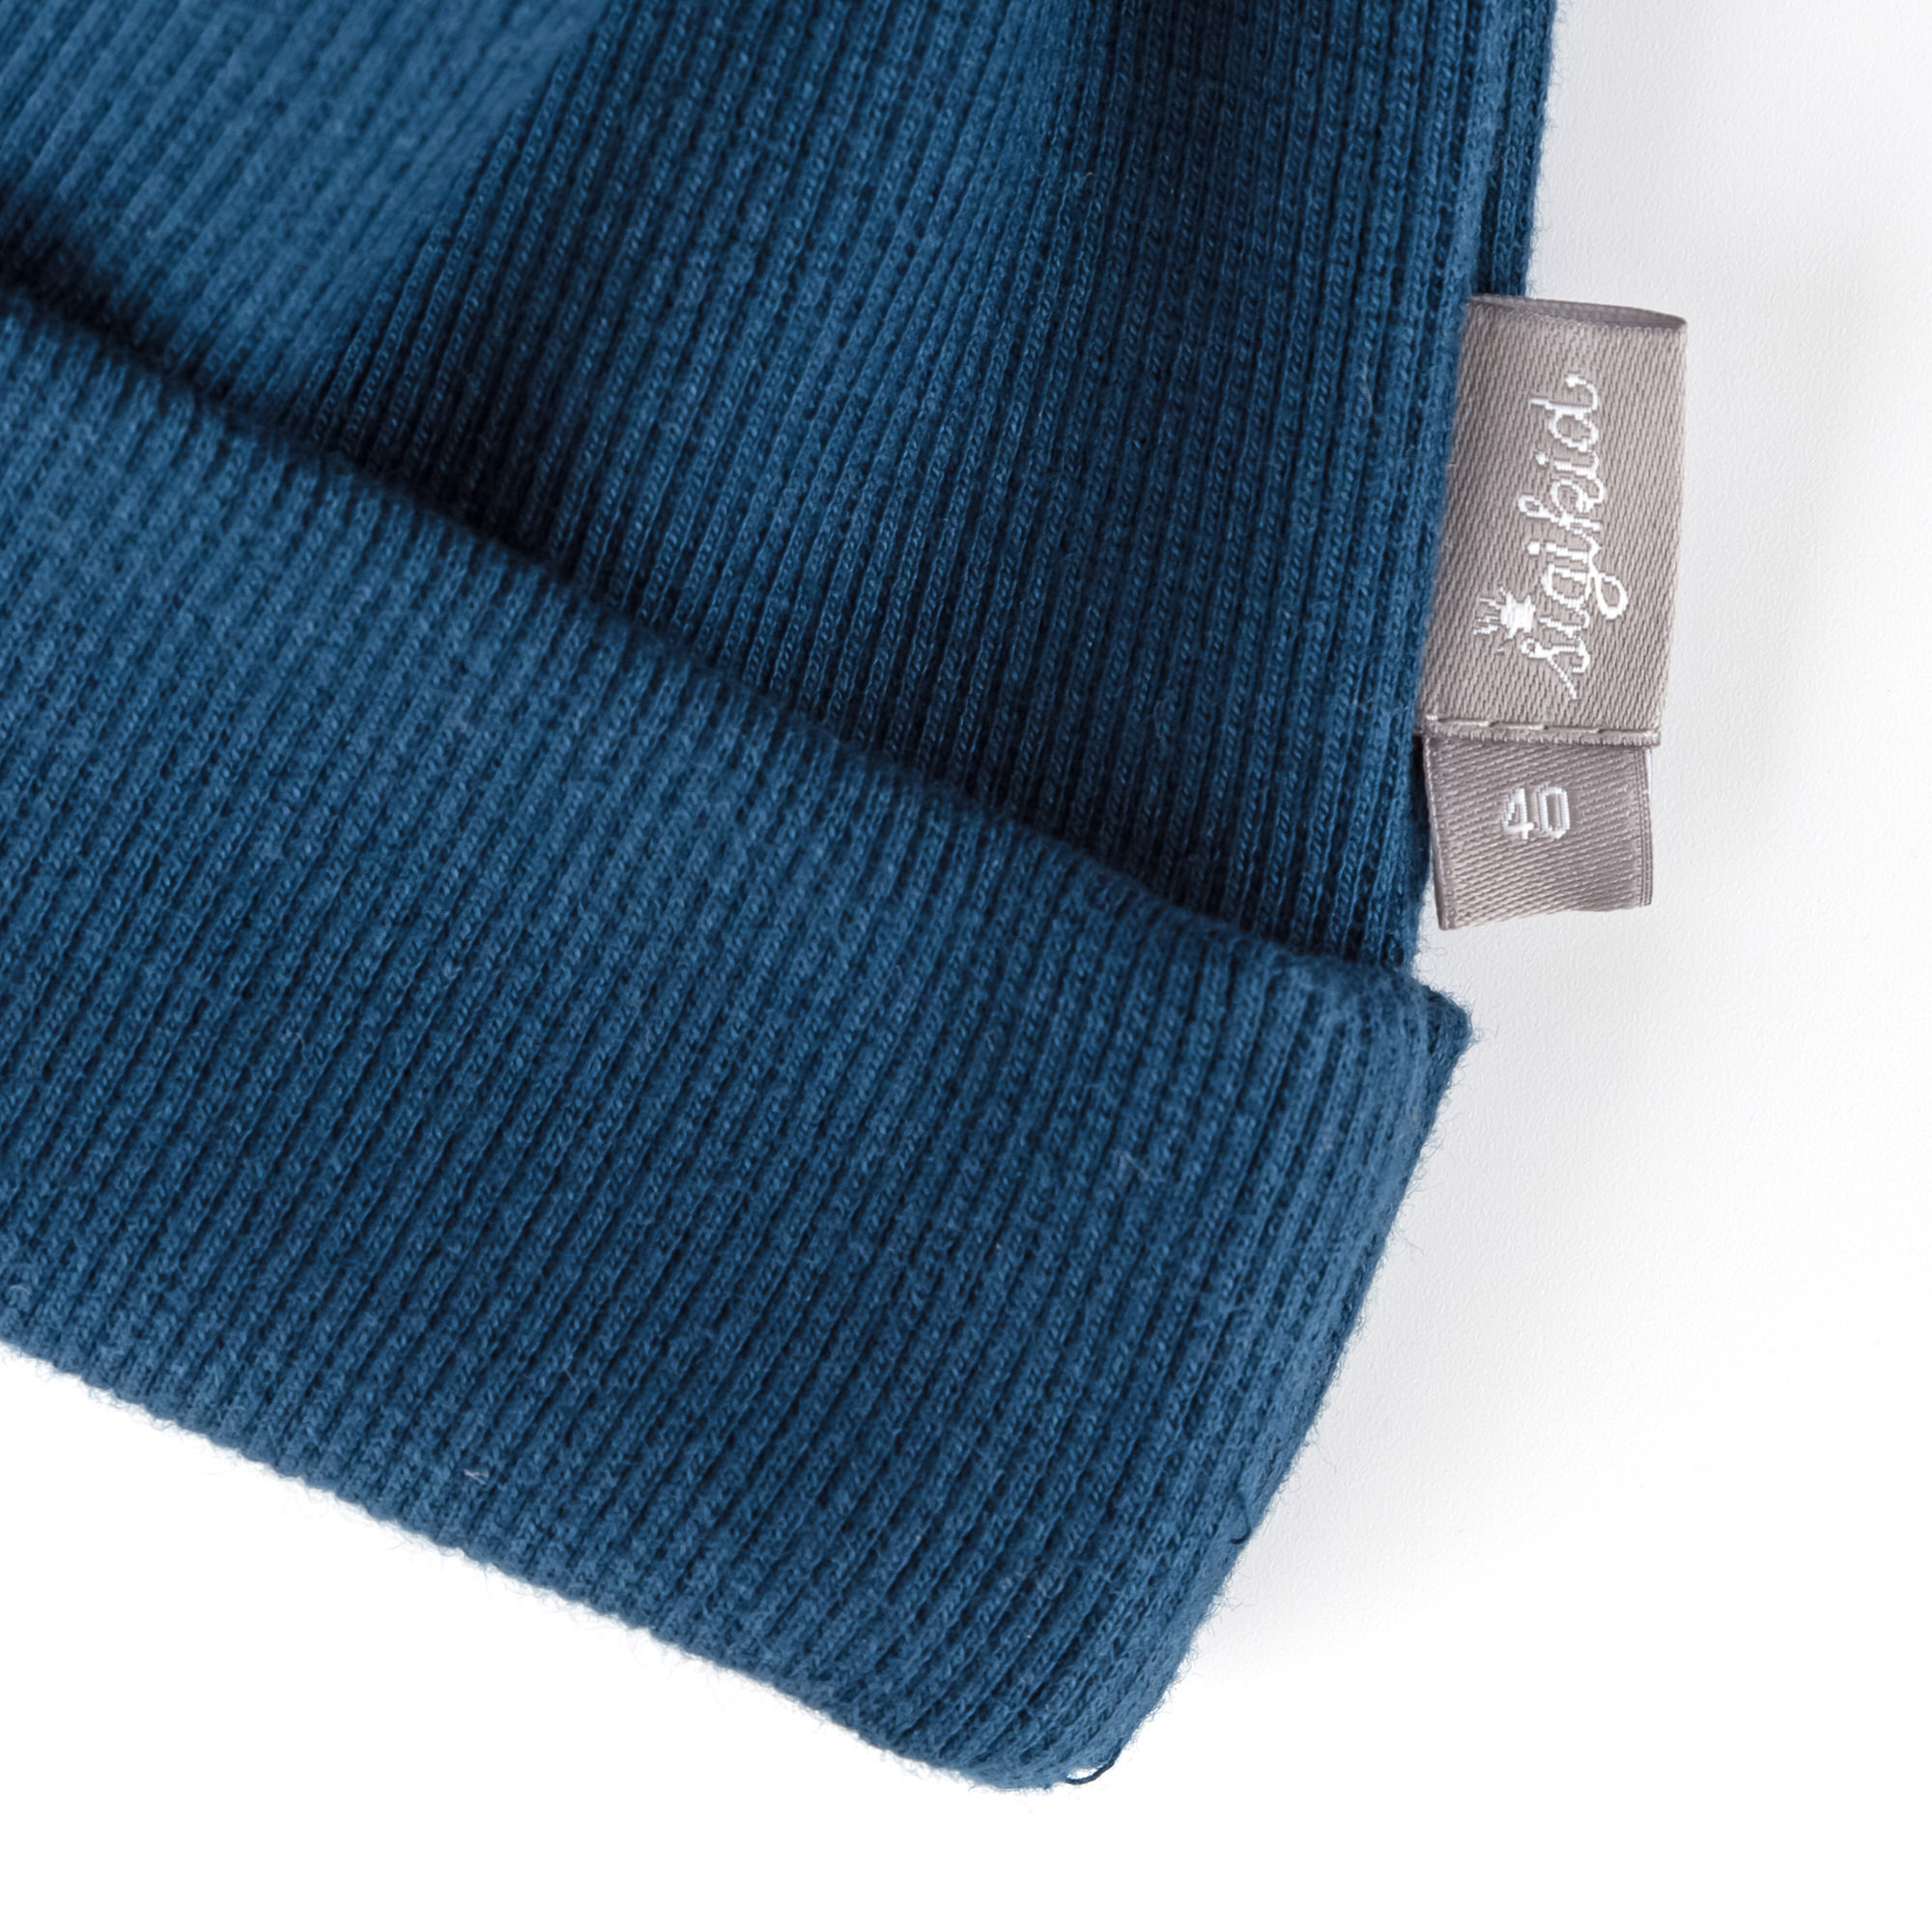 Snug baby rib knit beanie hat, dark teal blue